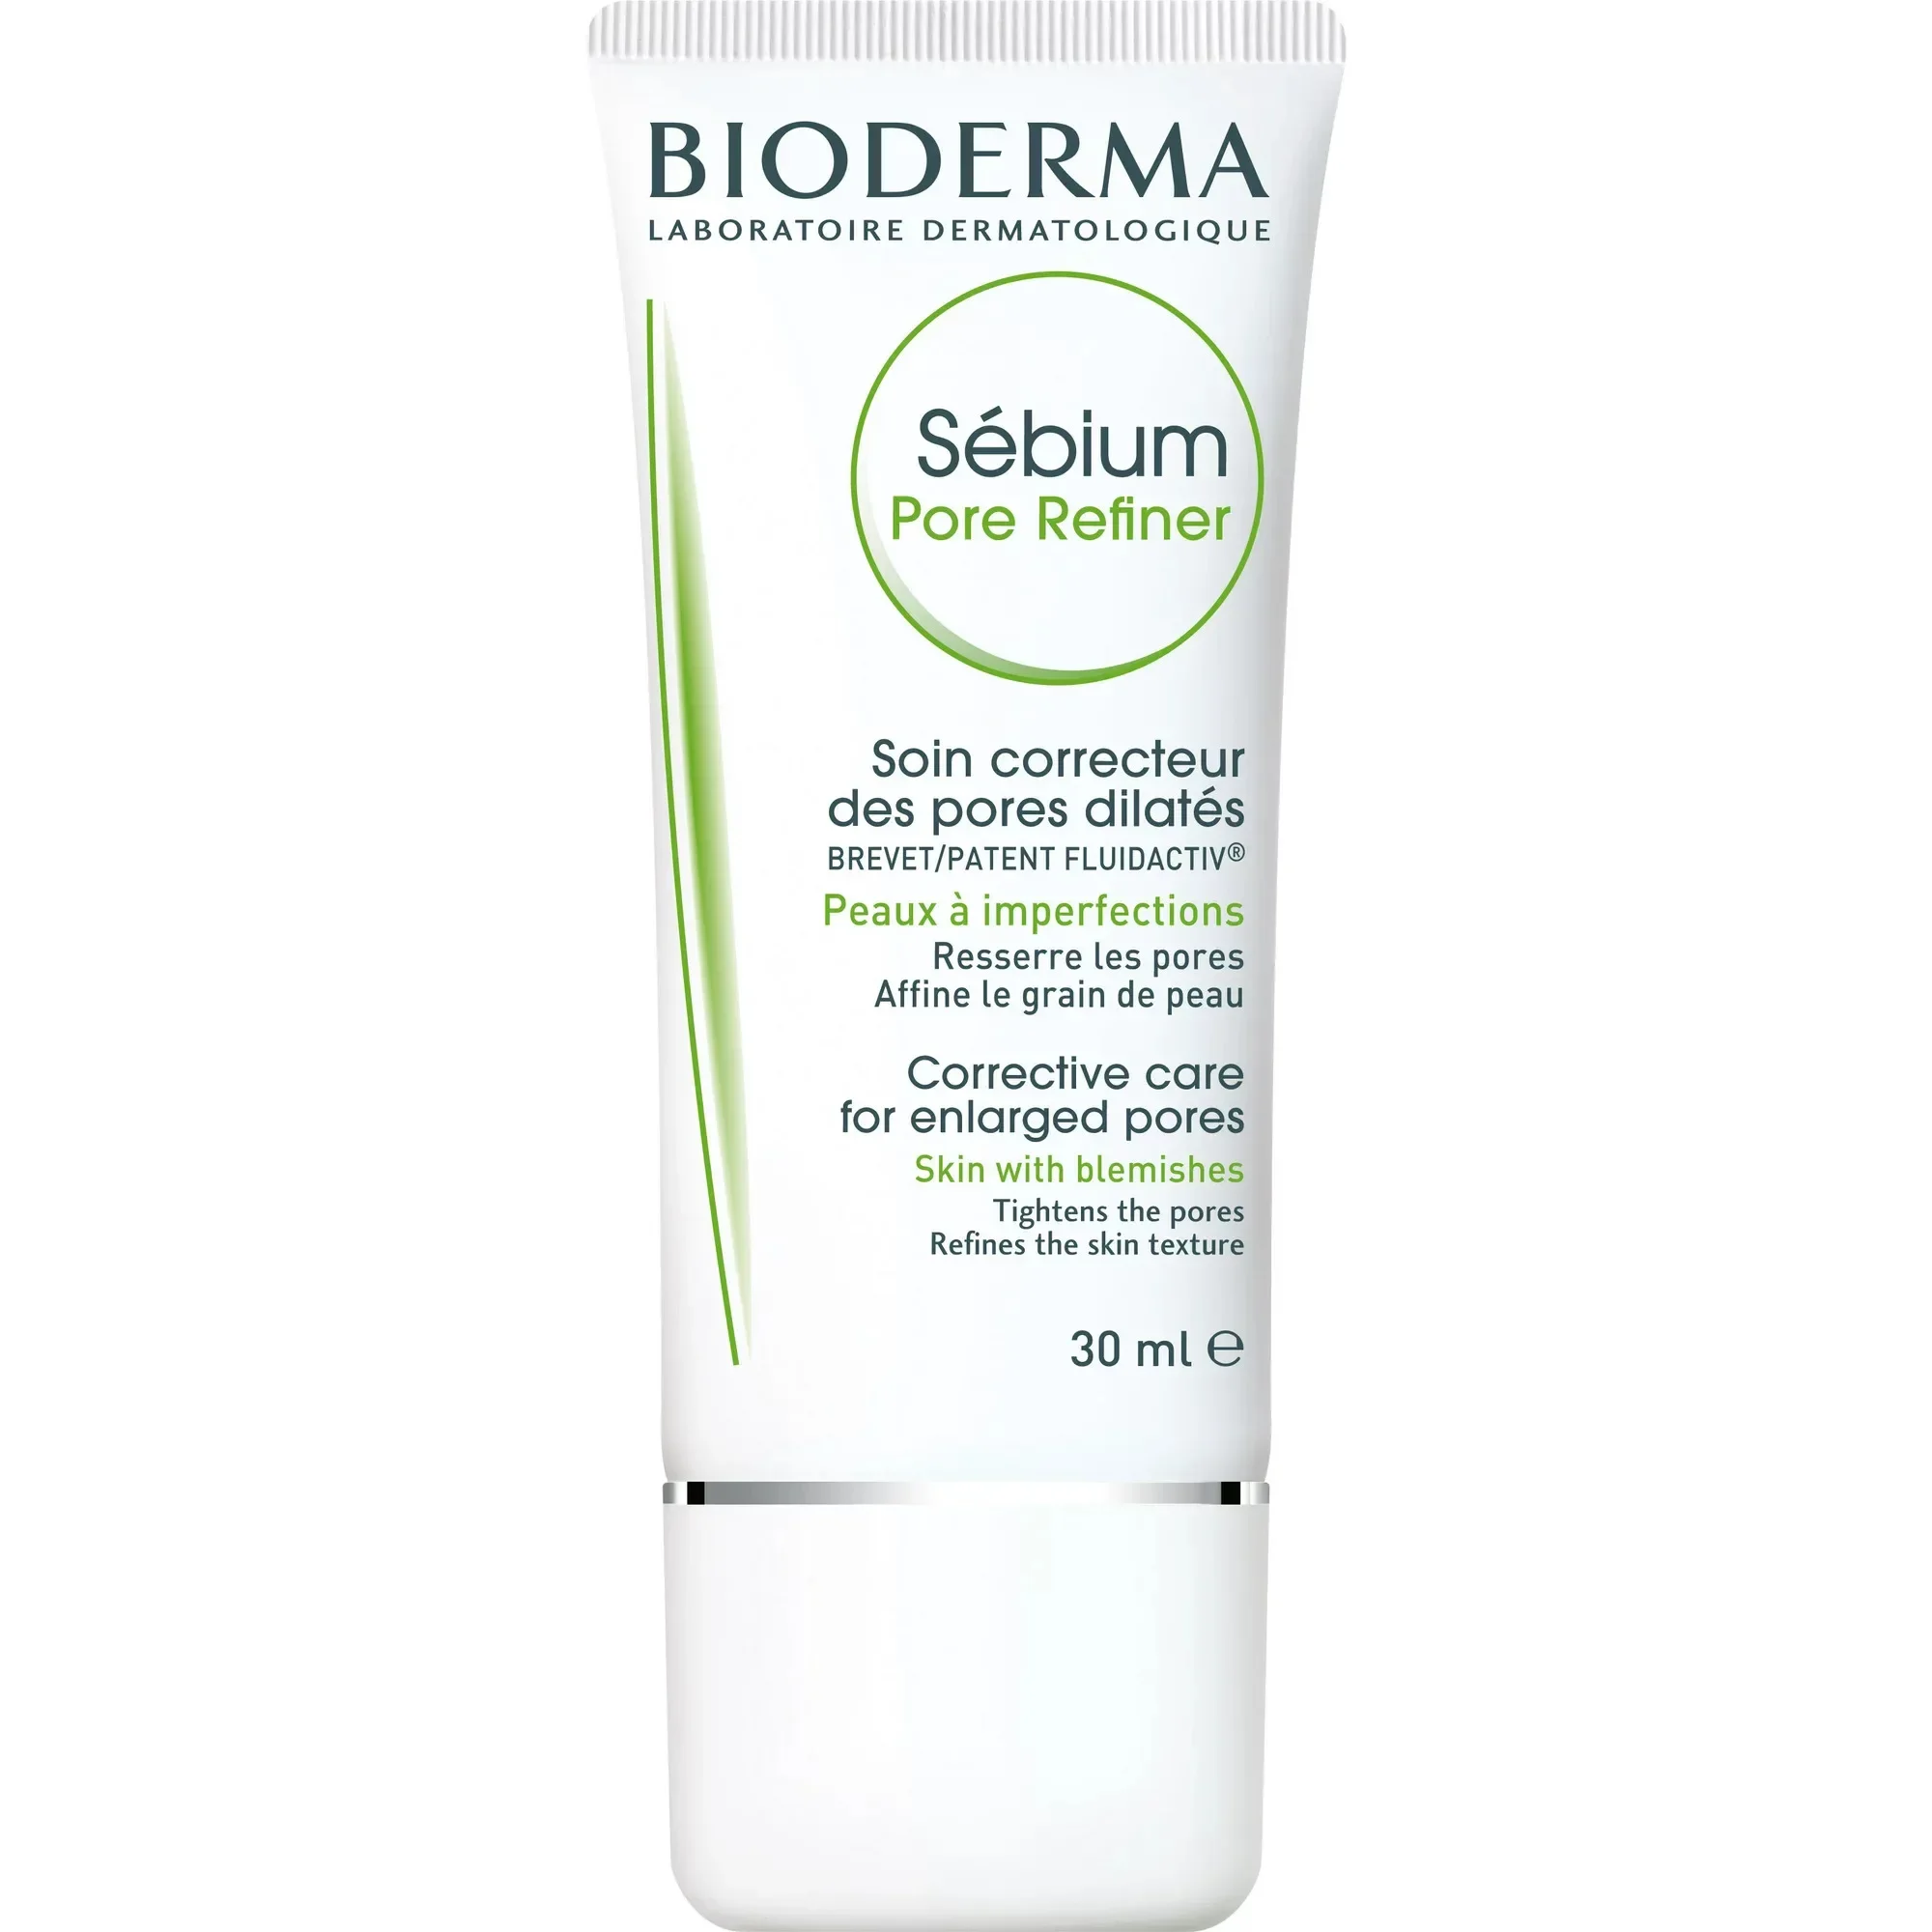 

Bioderma-крем для очистки пор Sebium, корректирующий уход за увеличенными порами-1 fl. Унция.